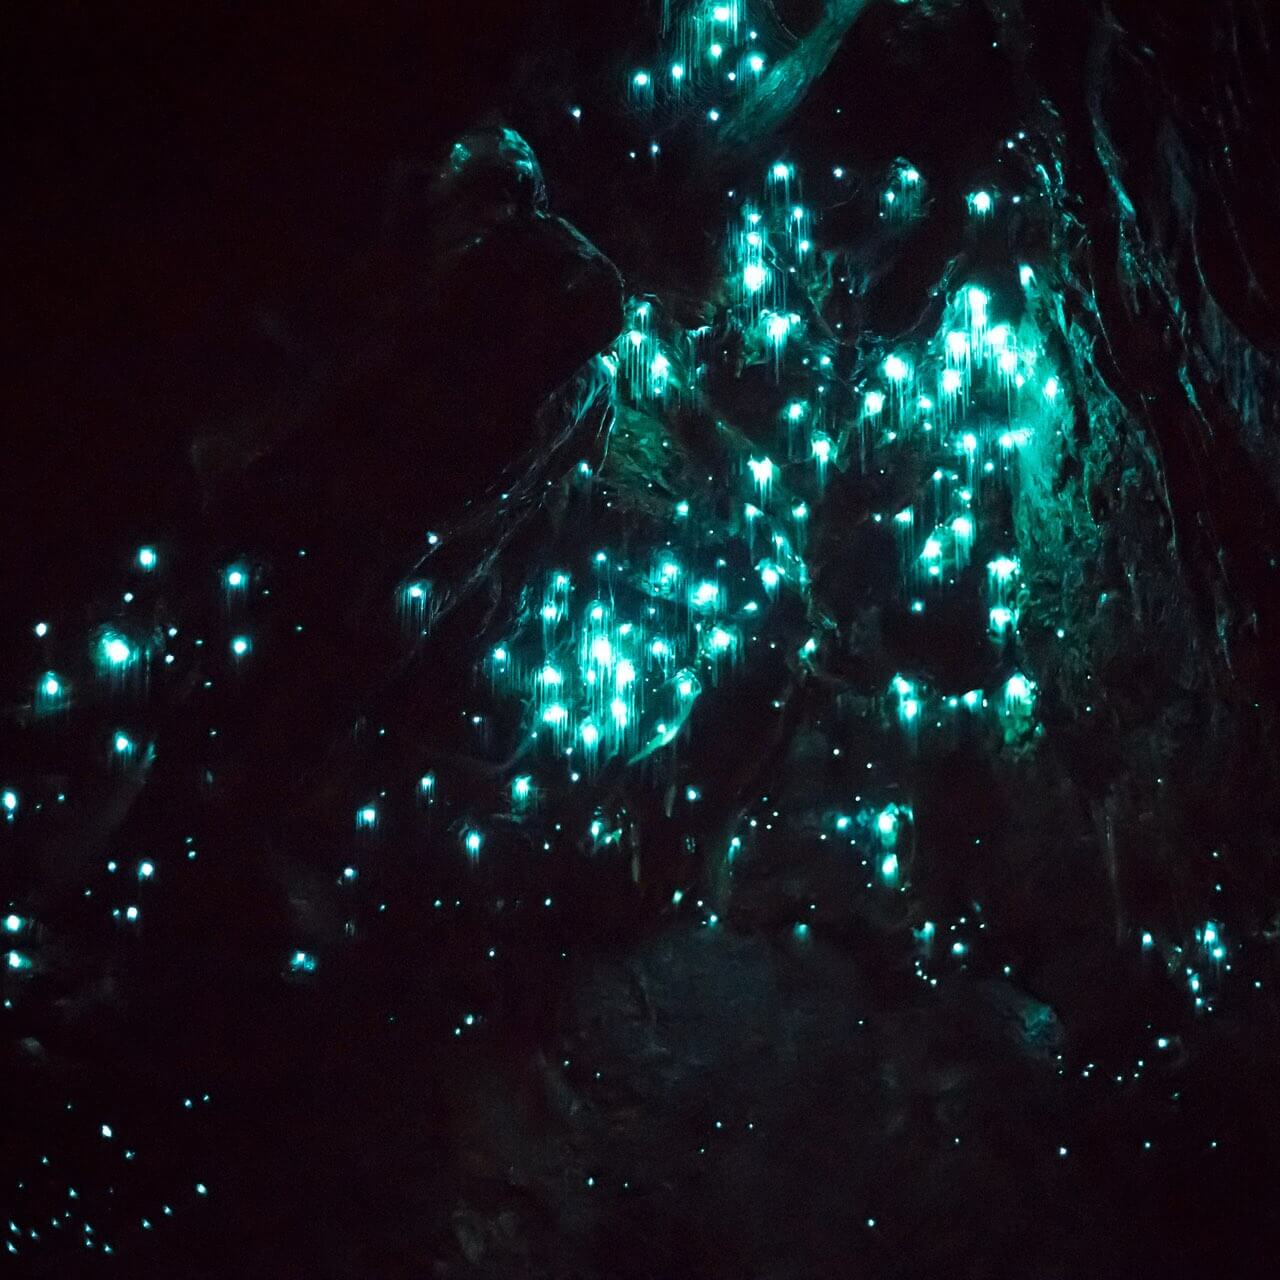 Glowworm Caves in Neuseeland